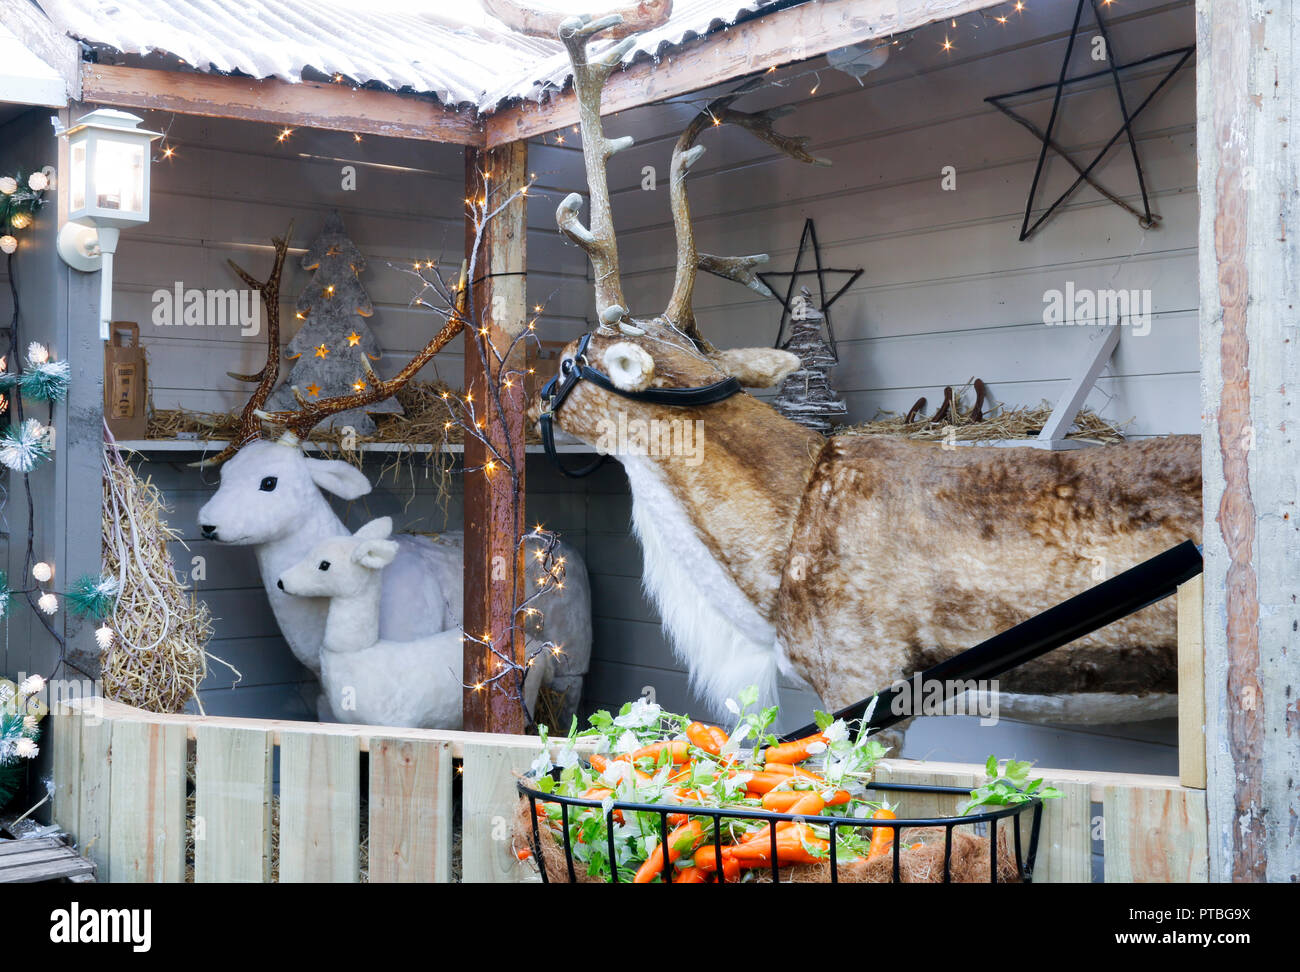 Festive reindeer display inside shop at Christmas Stock Photo